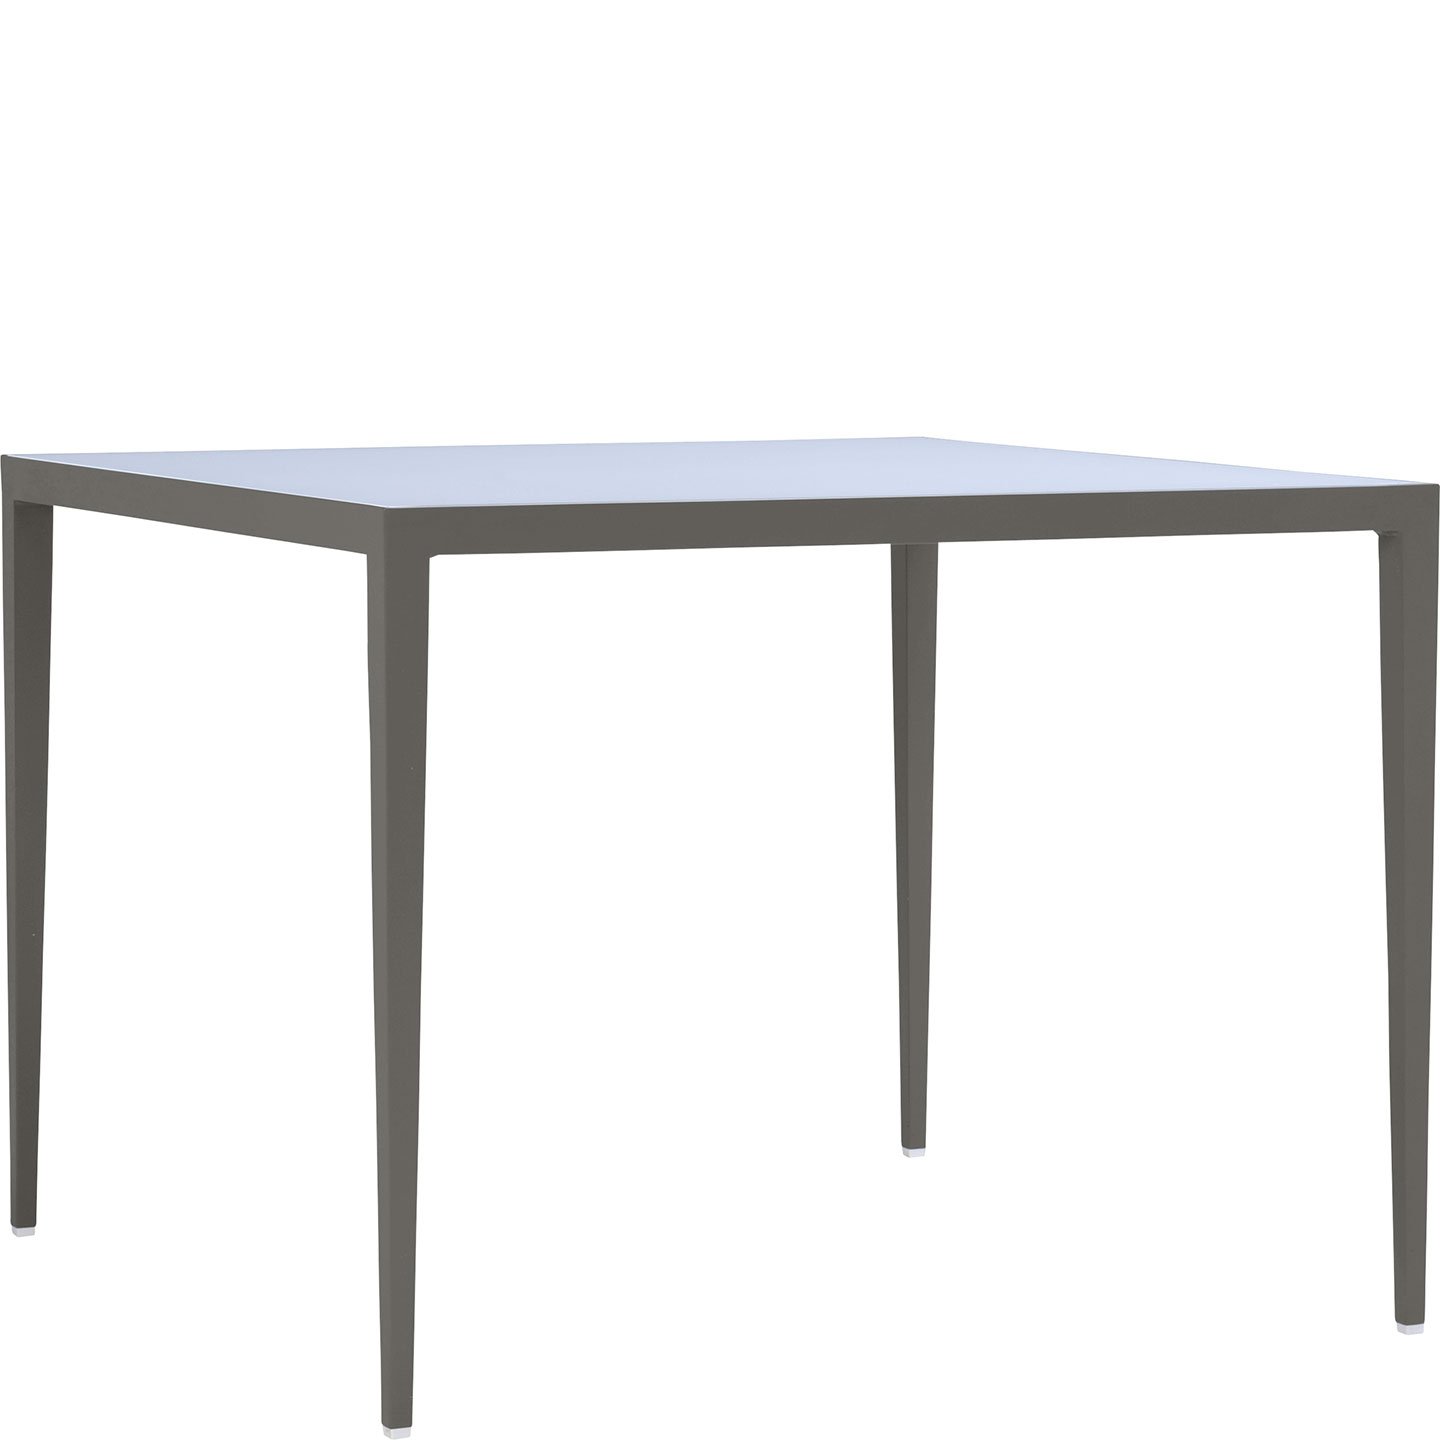 Haworth Slant Table with glass top